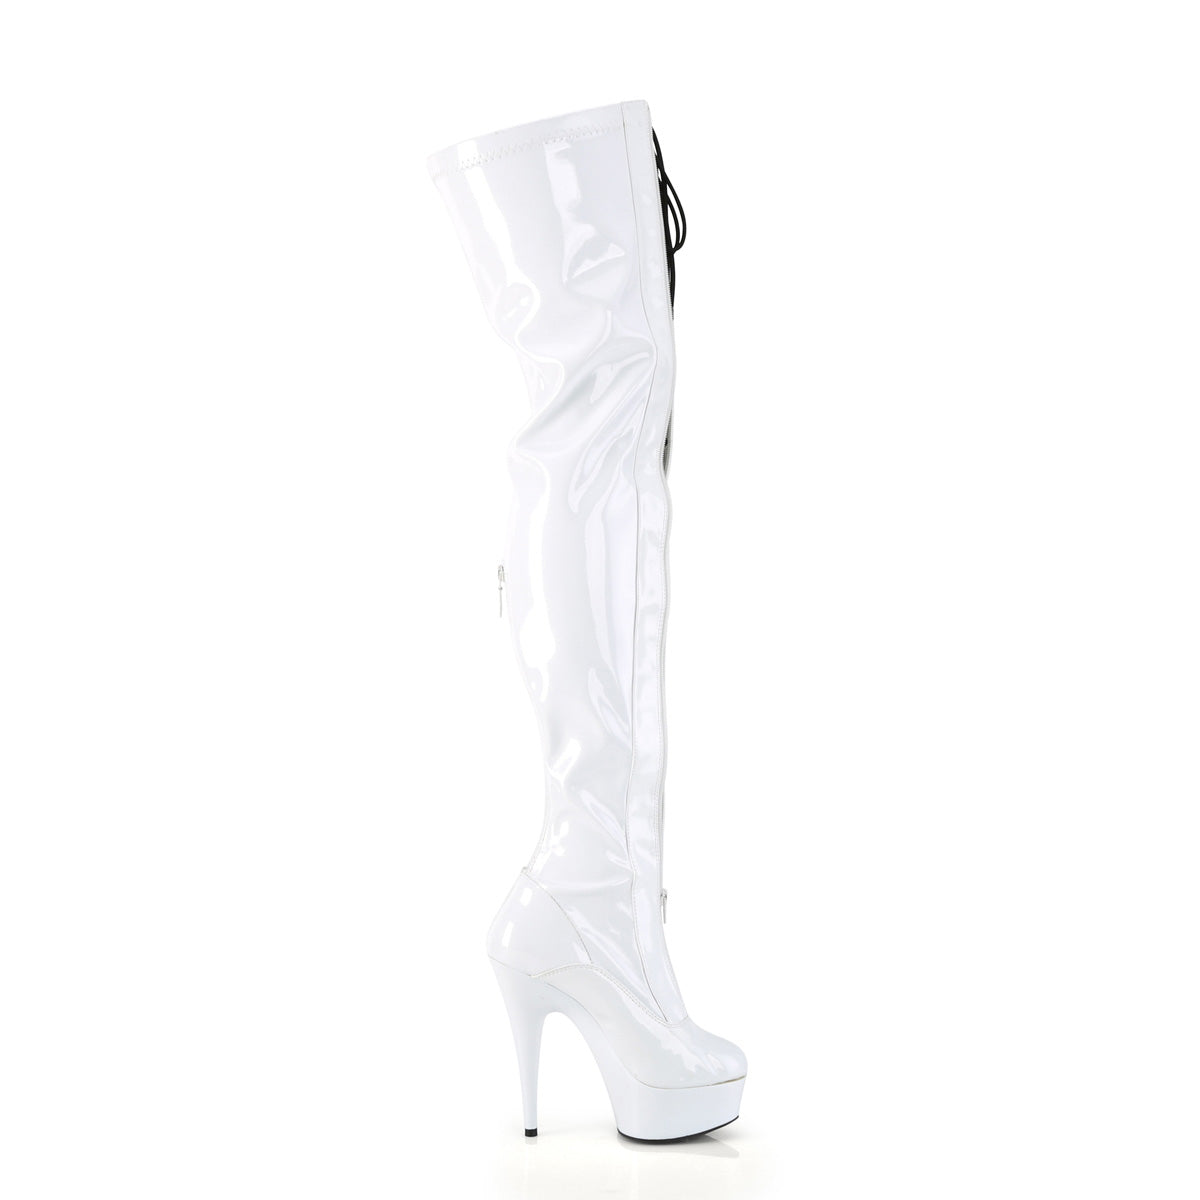 6 Inch Heel DELIGHT-3027 White-Black Stretch Pat